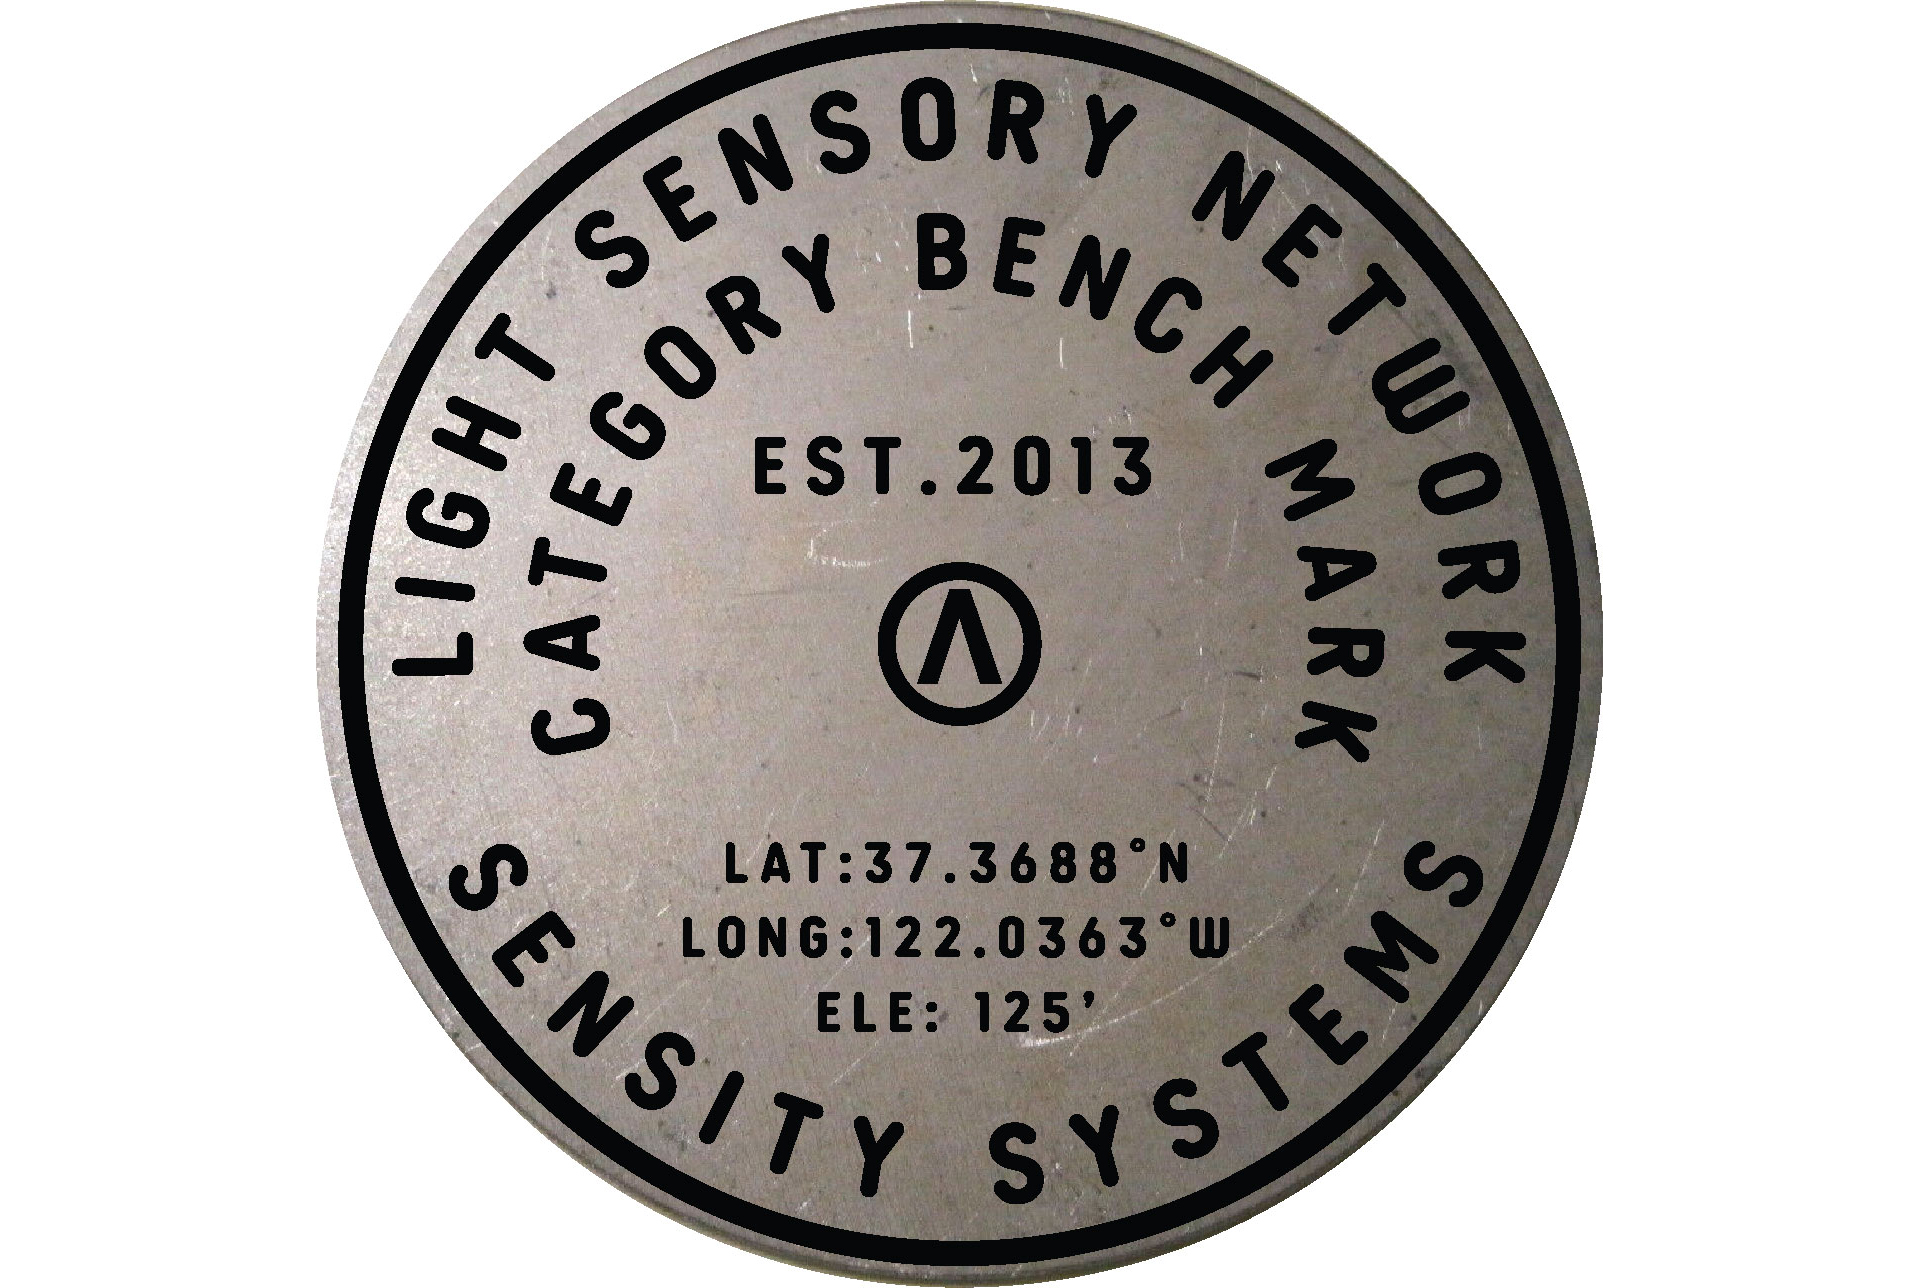 Light Sensory Network